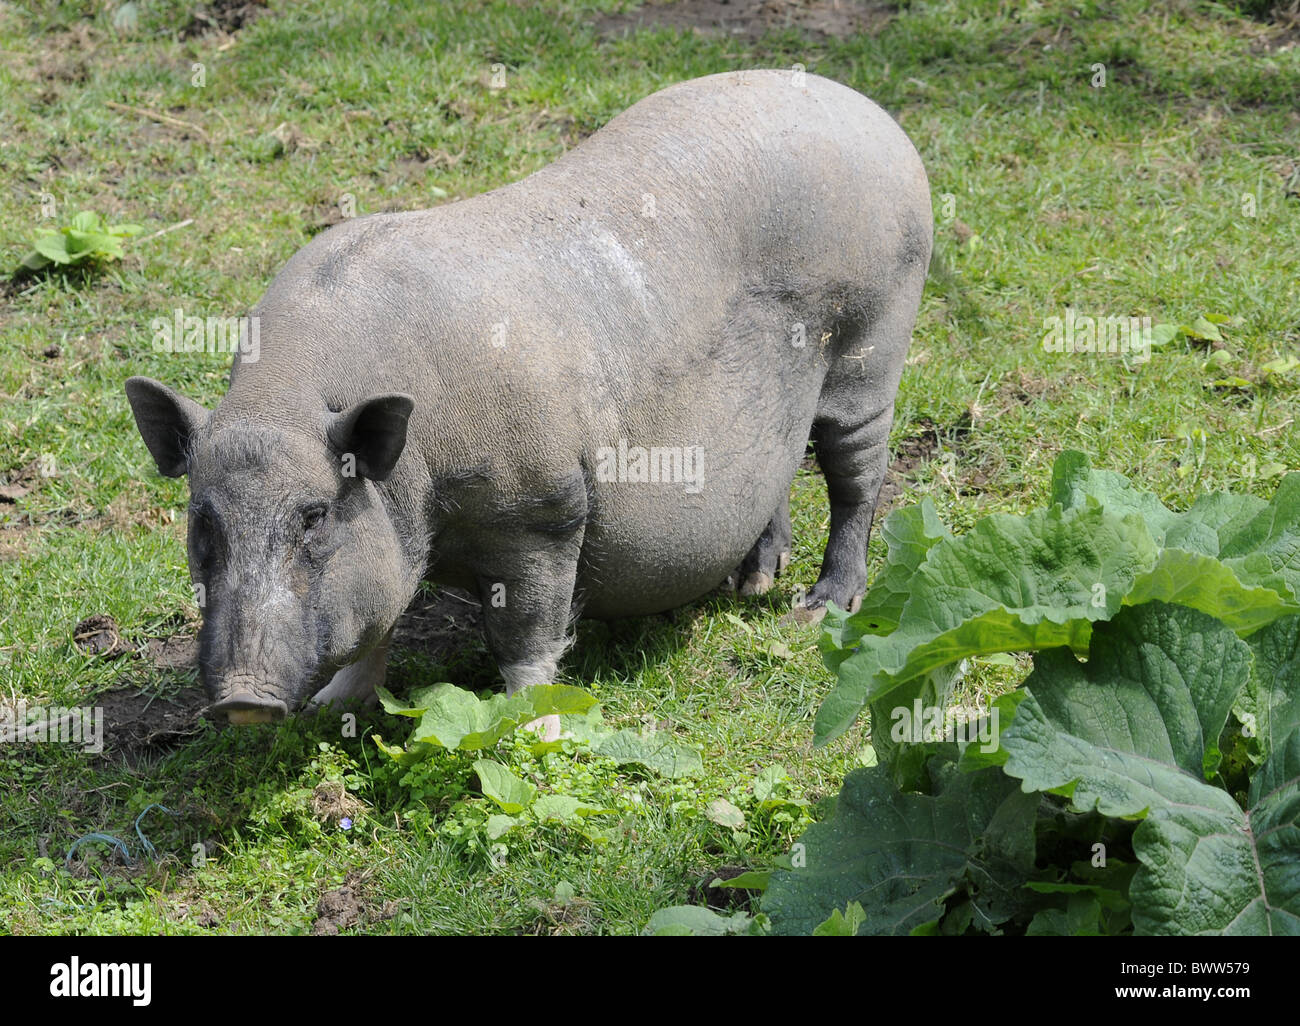 Pigs domestic pig pigs domestic domesticated farm omnivore omnivores mammal  mammals animal animals livestock 